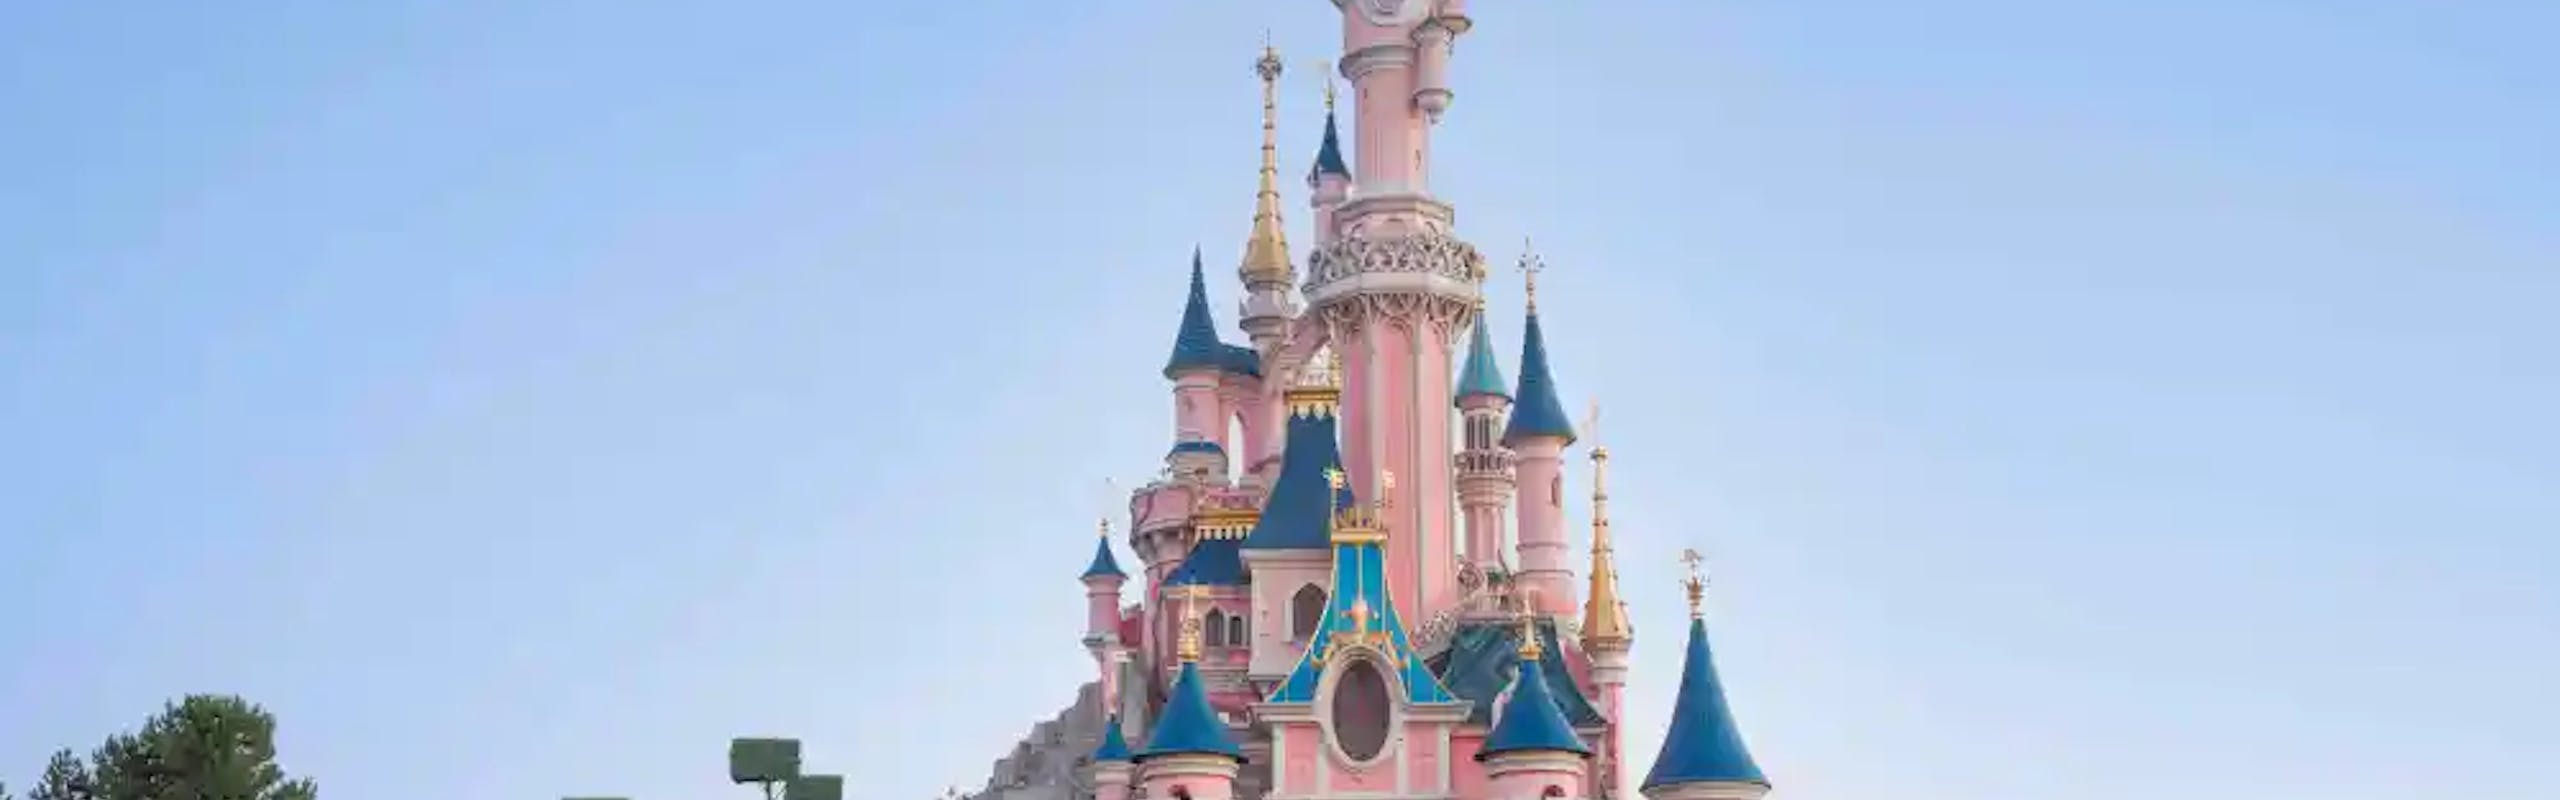 Il castello di Cenerentola a Disneyland Paris (Courtesy Disneyland Paris)